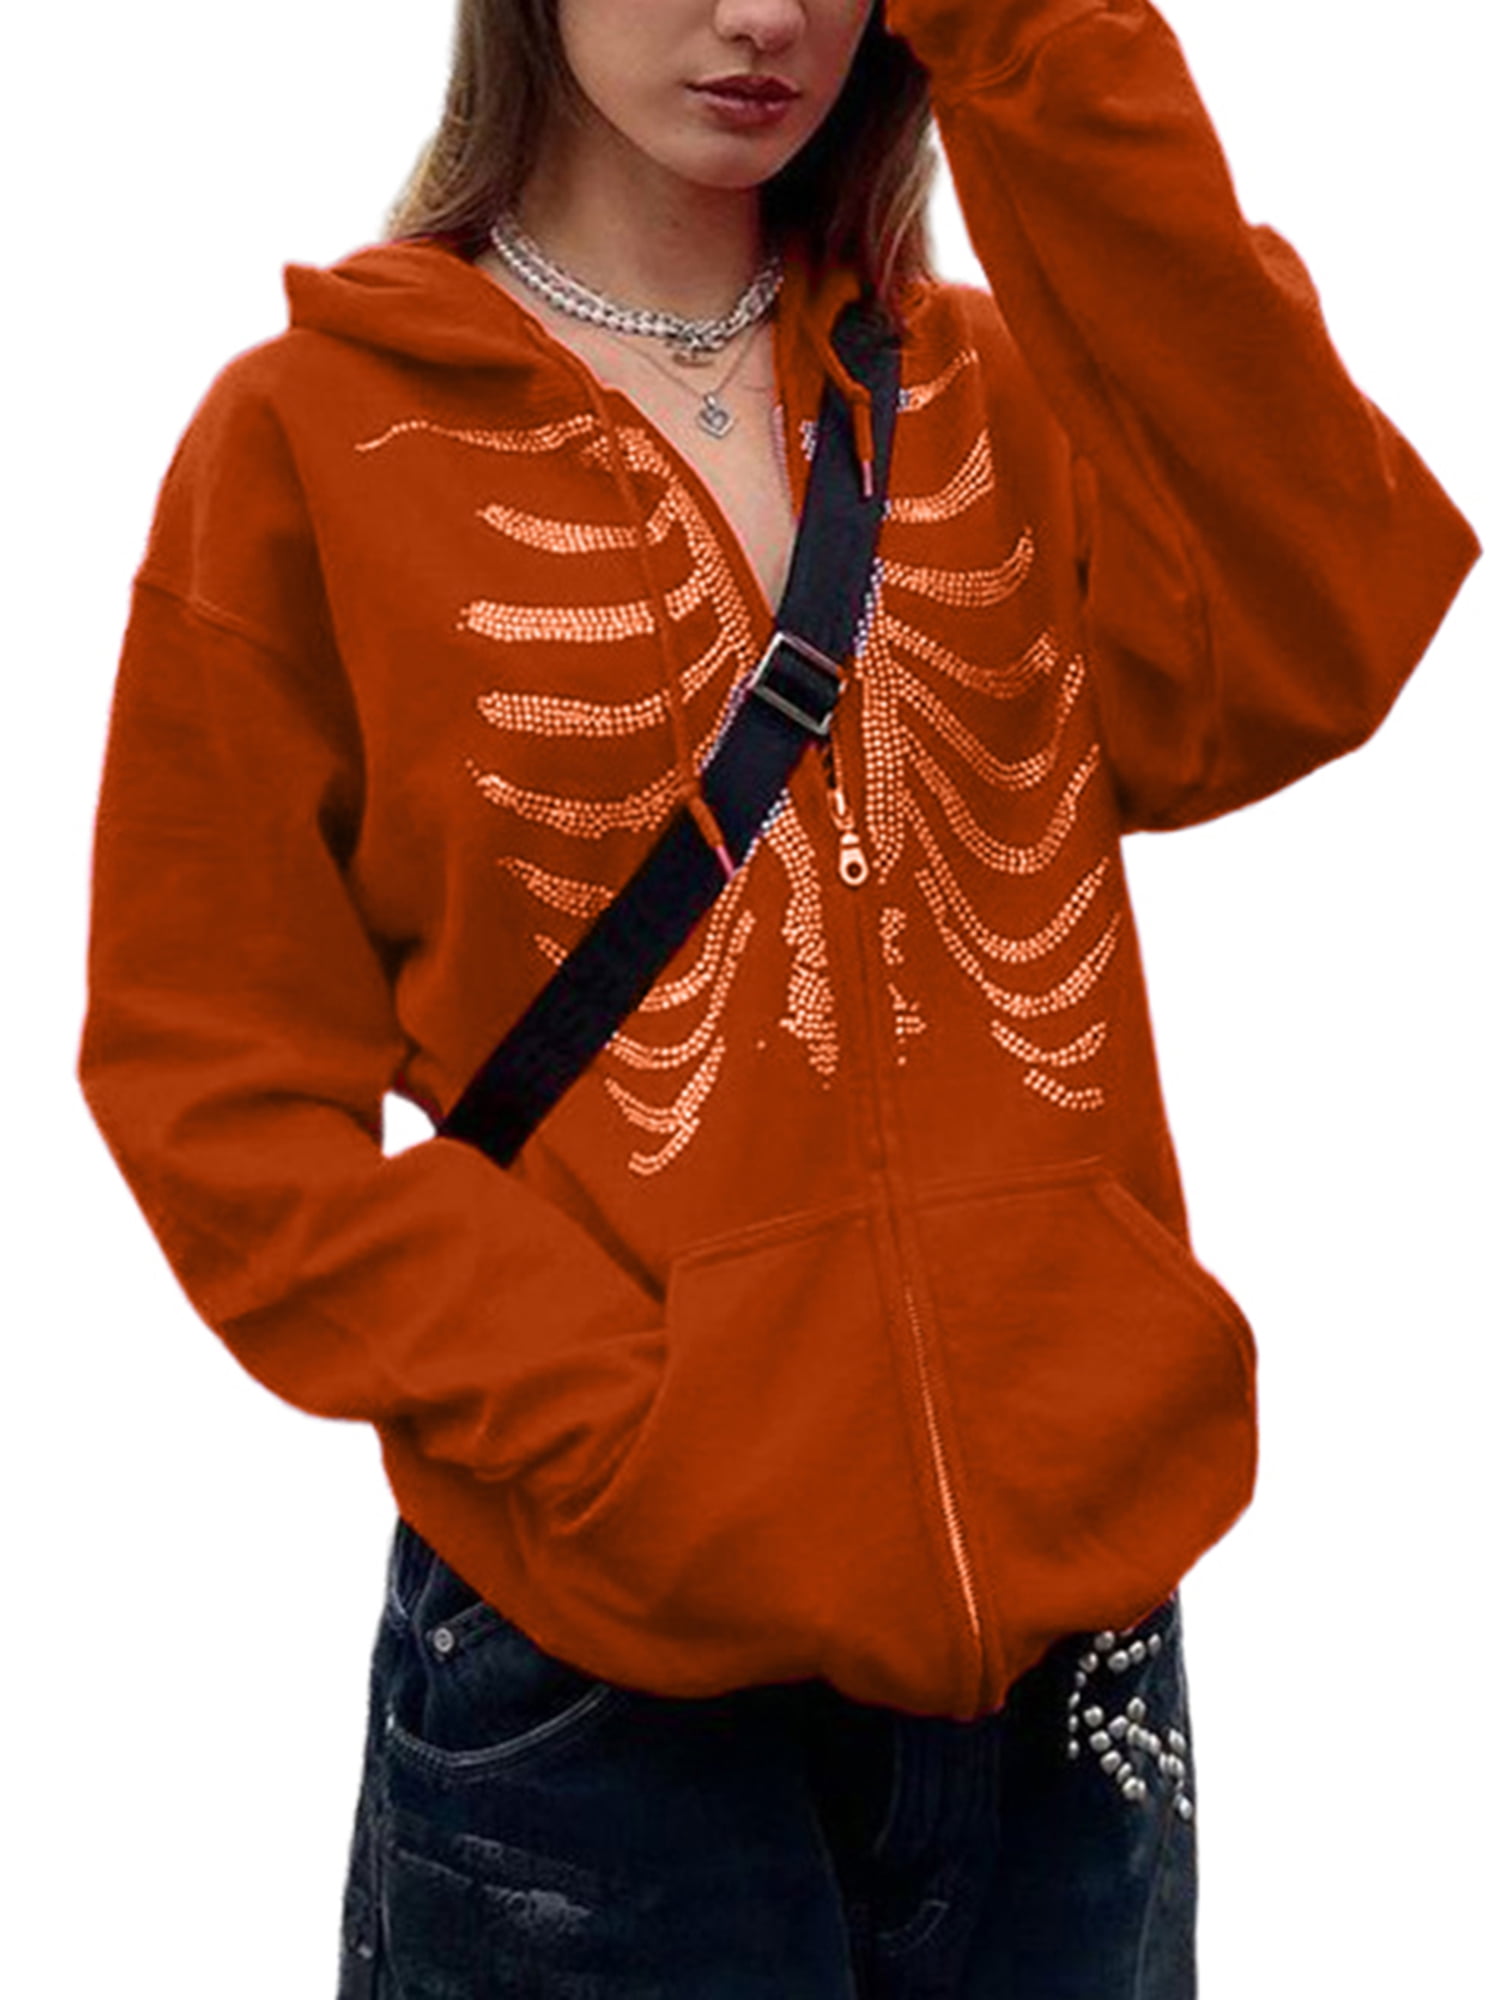 Plus Size Womens Skeleton Skull Print Holloween Knitted Open Cardigan Top 8 22